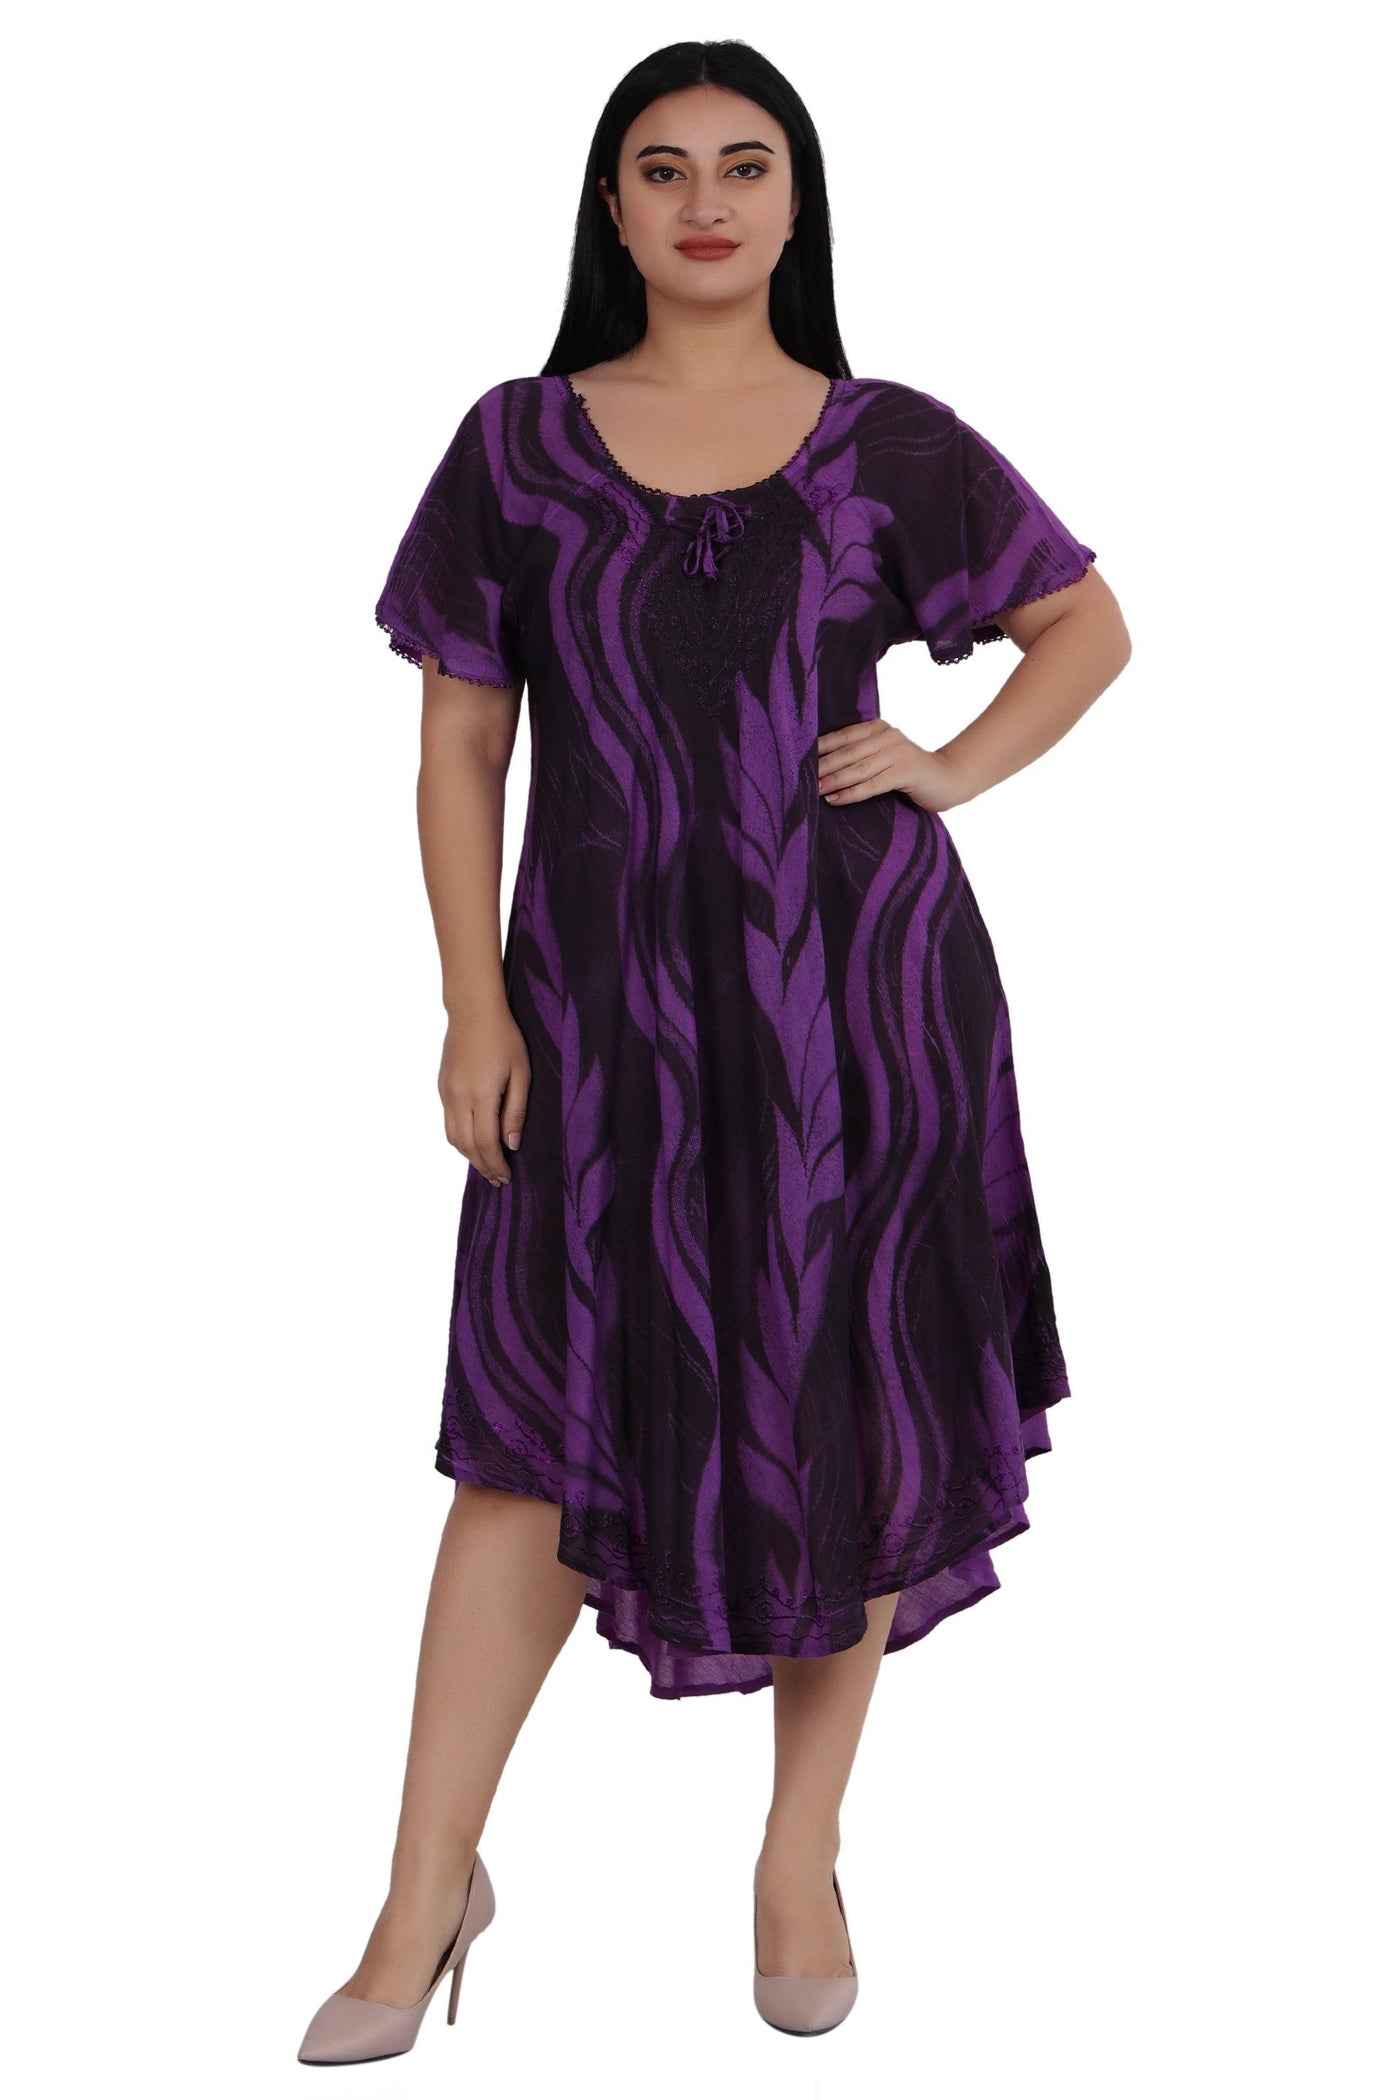 Wavy Tie Dye Dress 482164-SLVD  - Advance Apparels Inc